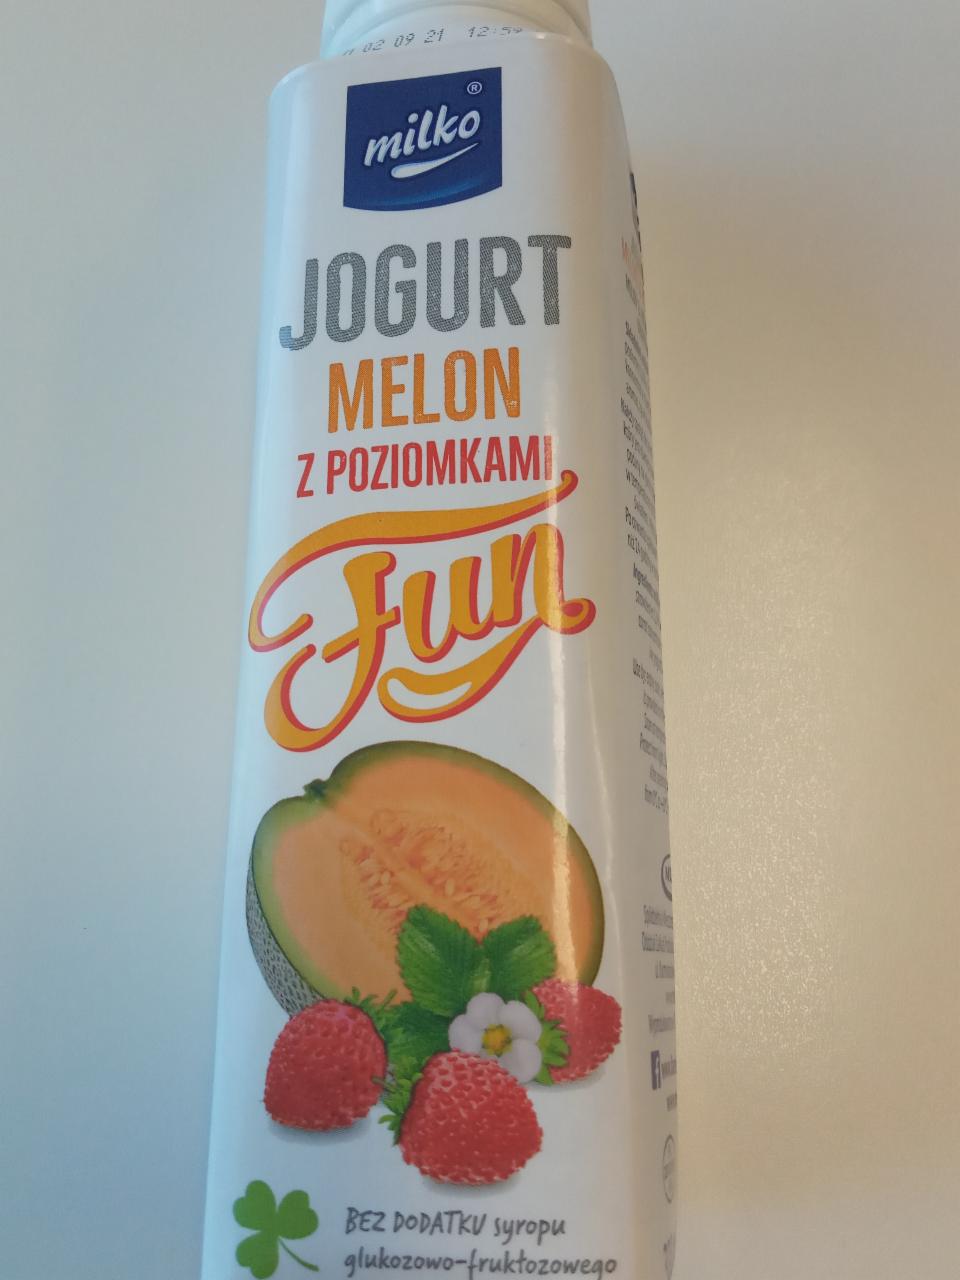 Zdjęcia - Milko Fun Jogurt melon z poziomkami 330 ml